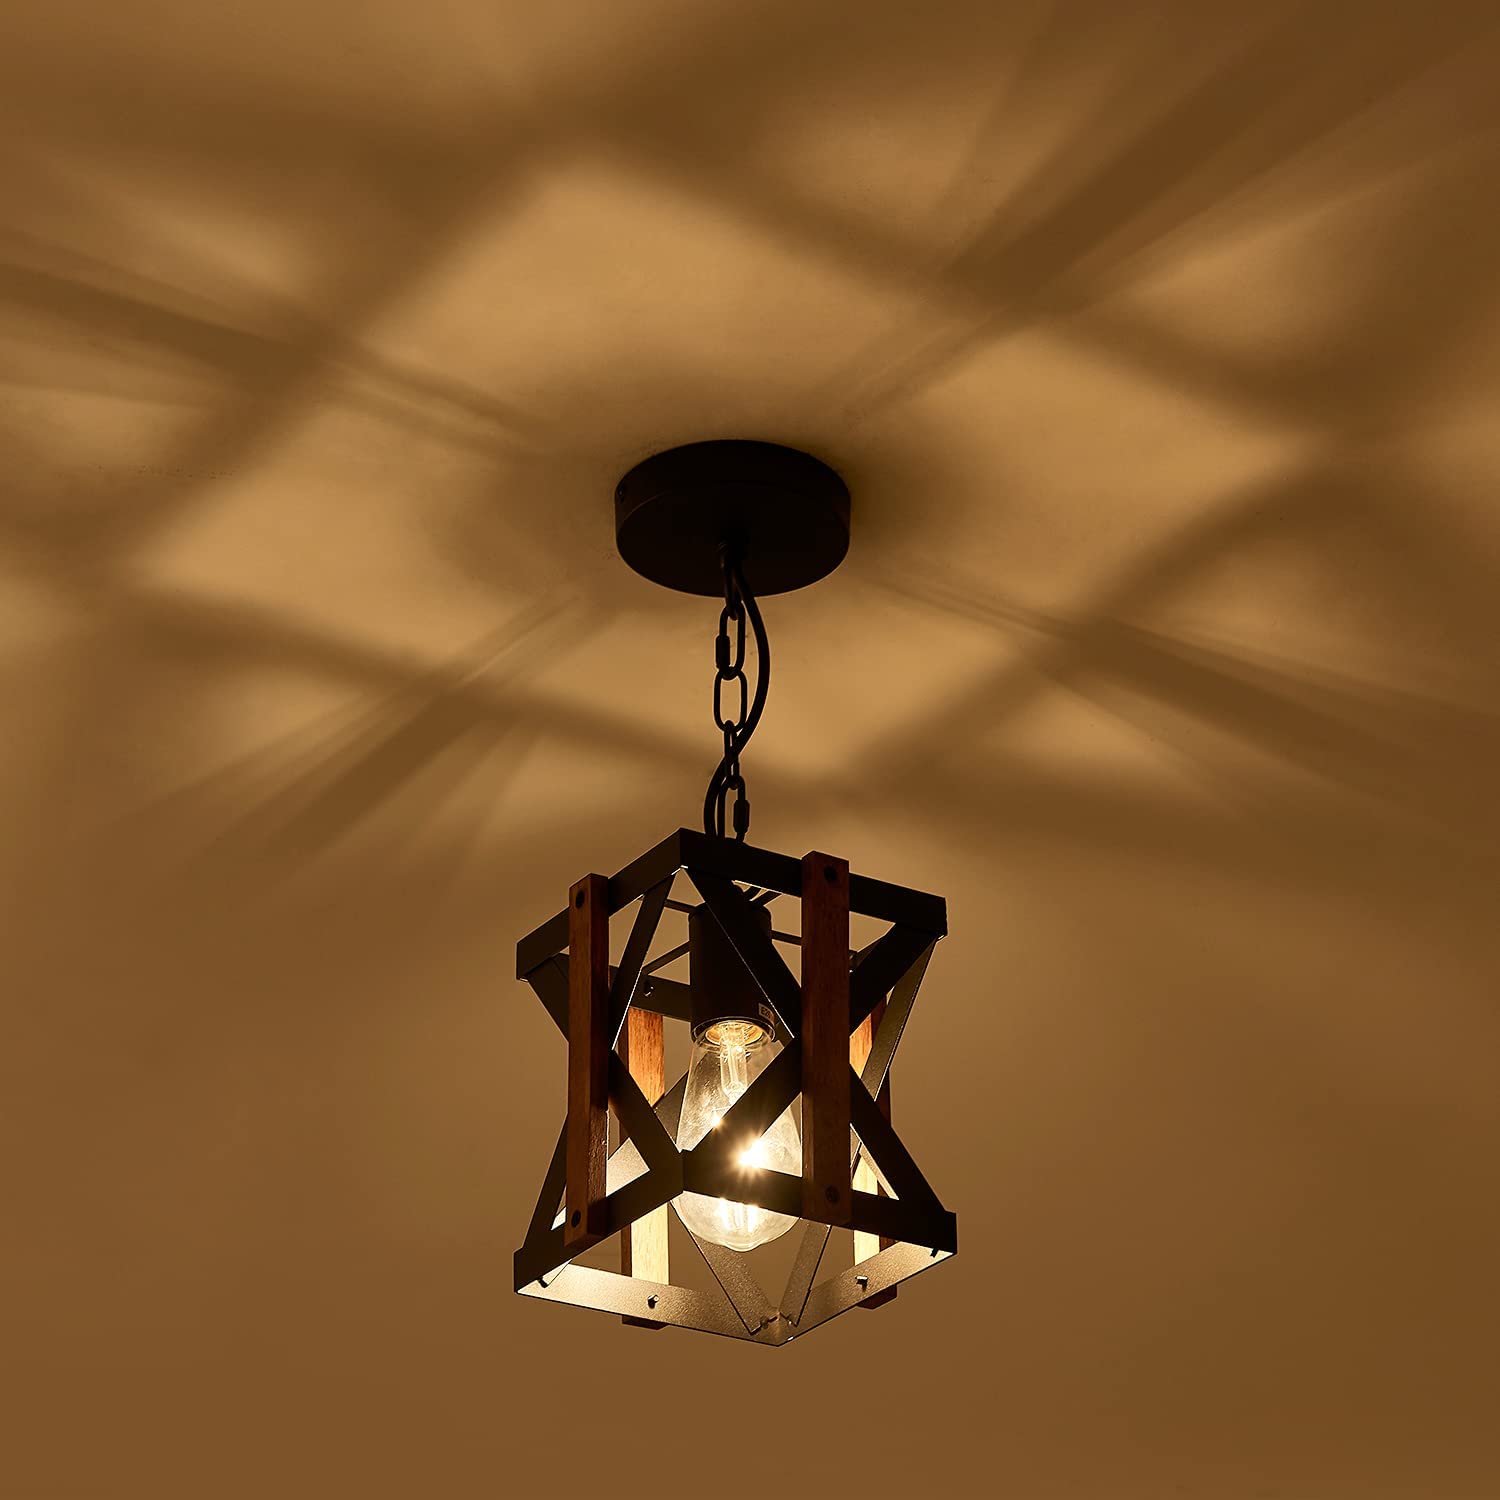 Square wood farmhouse light fixtures black cage pendant lighting for kitchen island